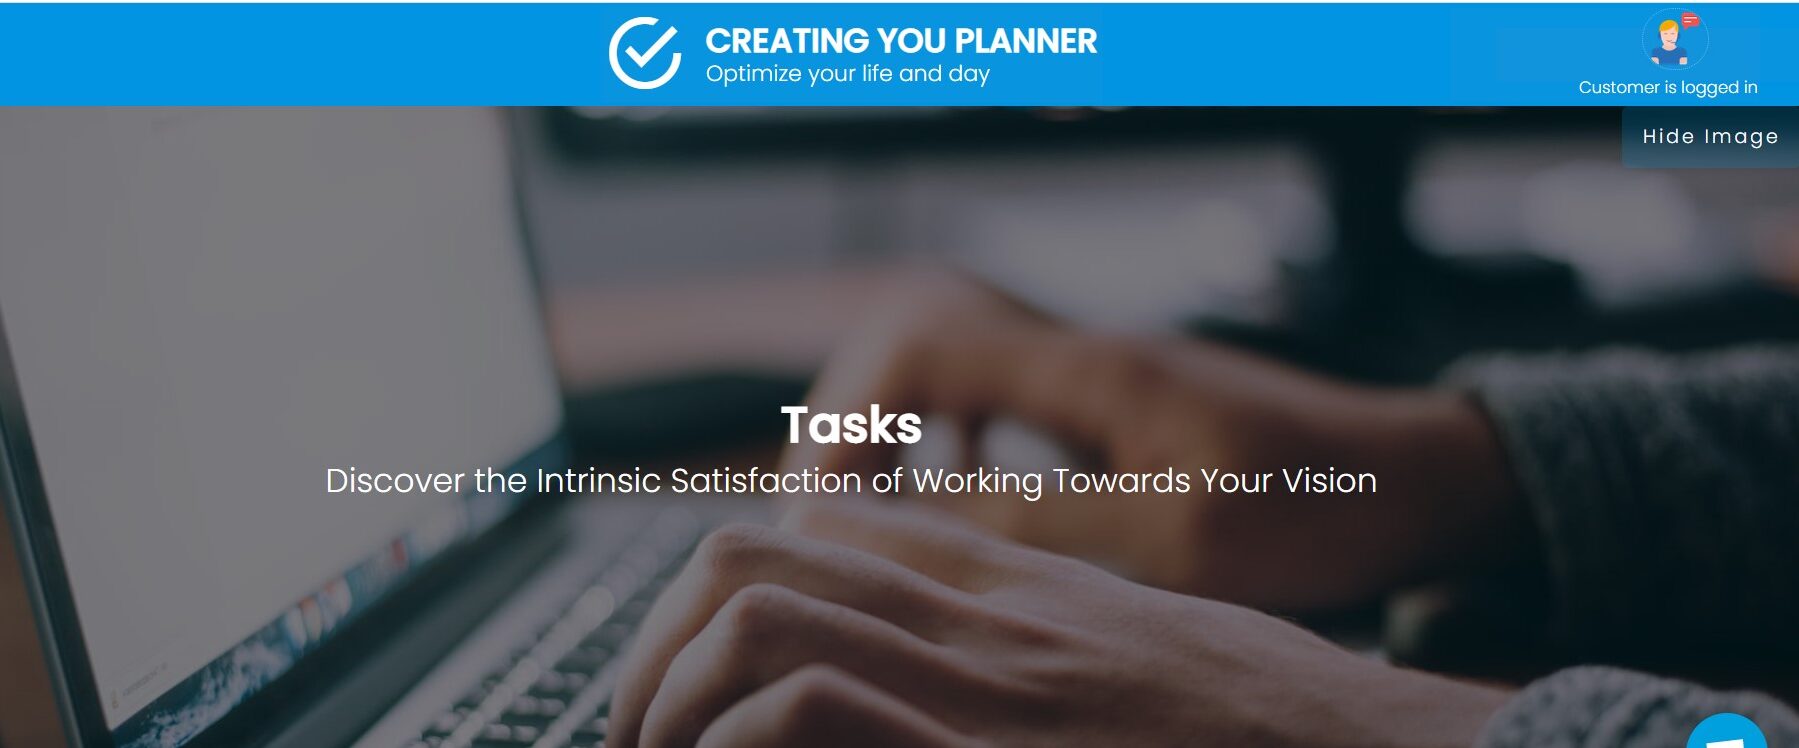 Tasks - Creating You Planner